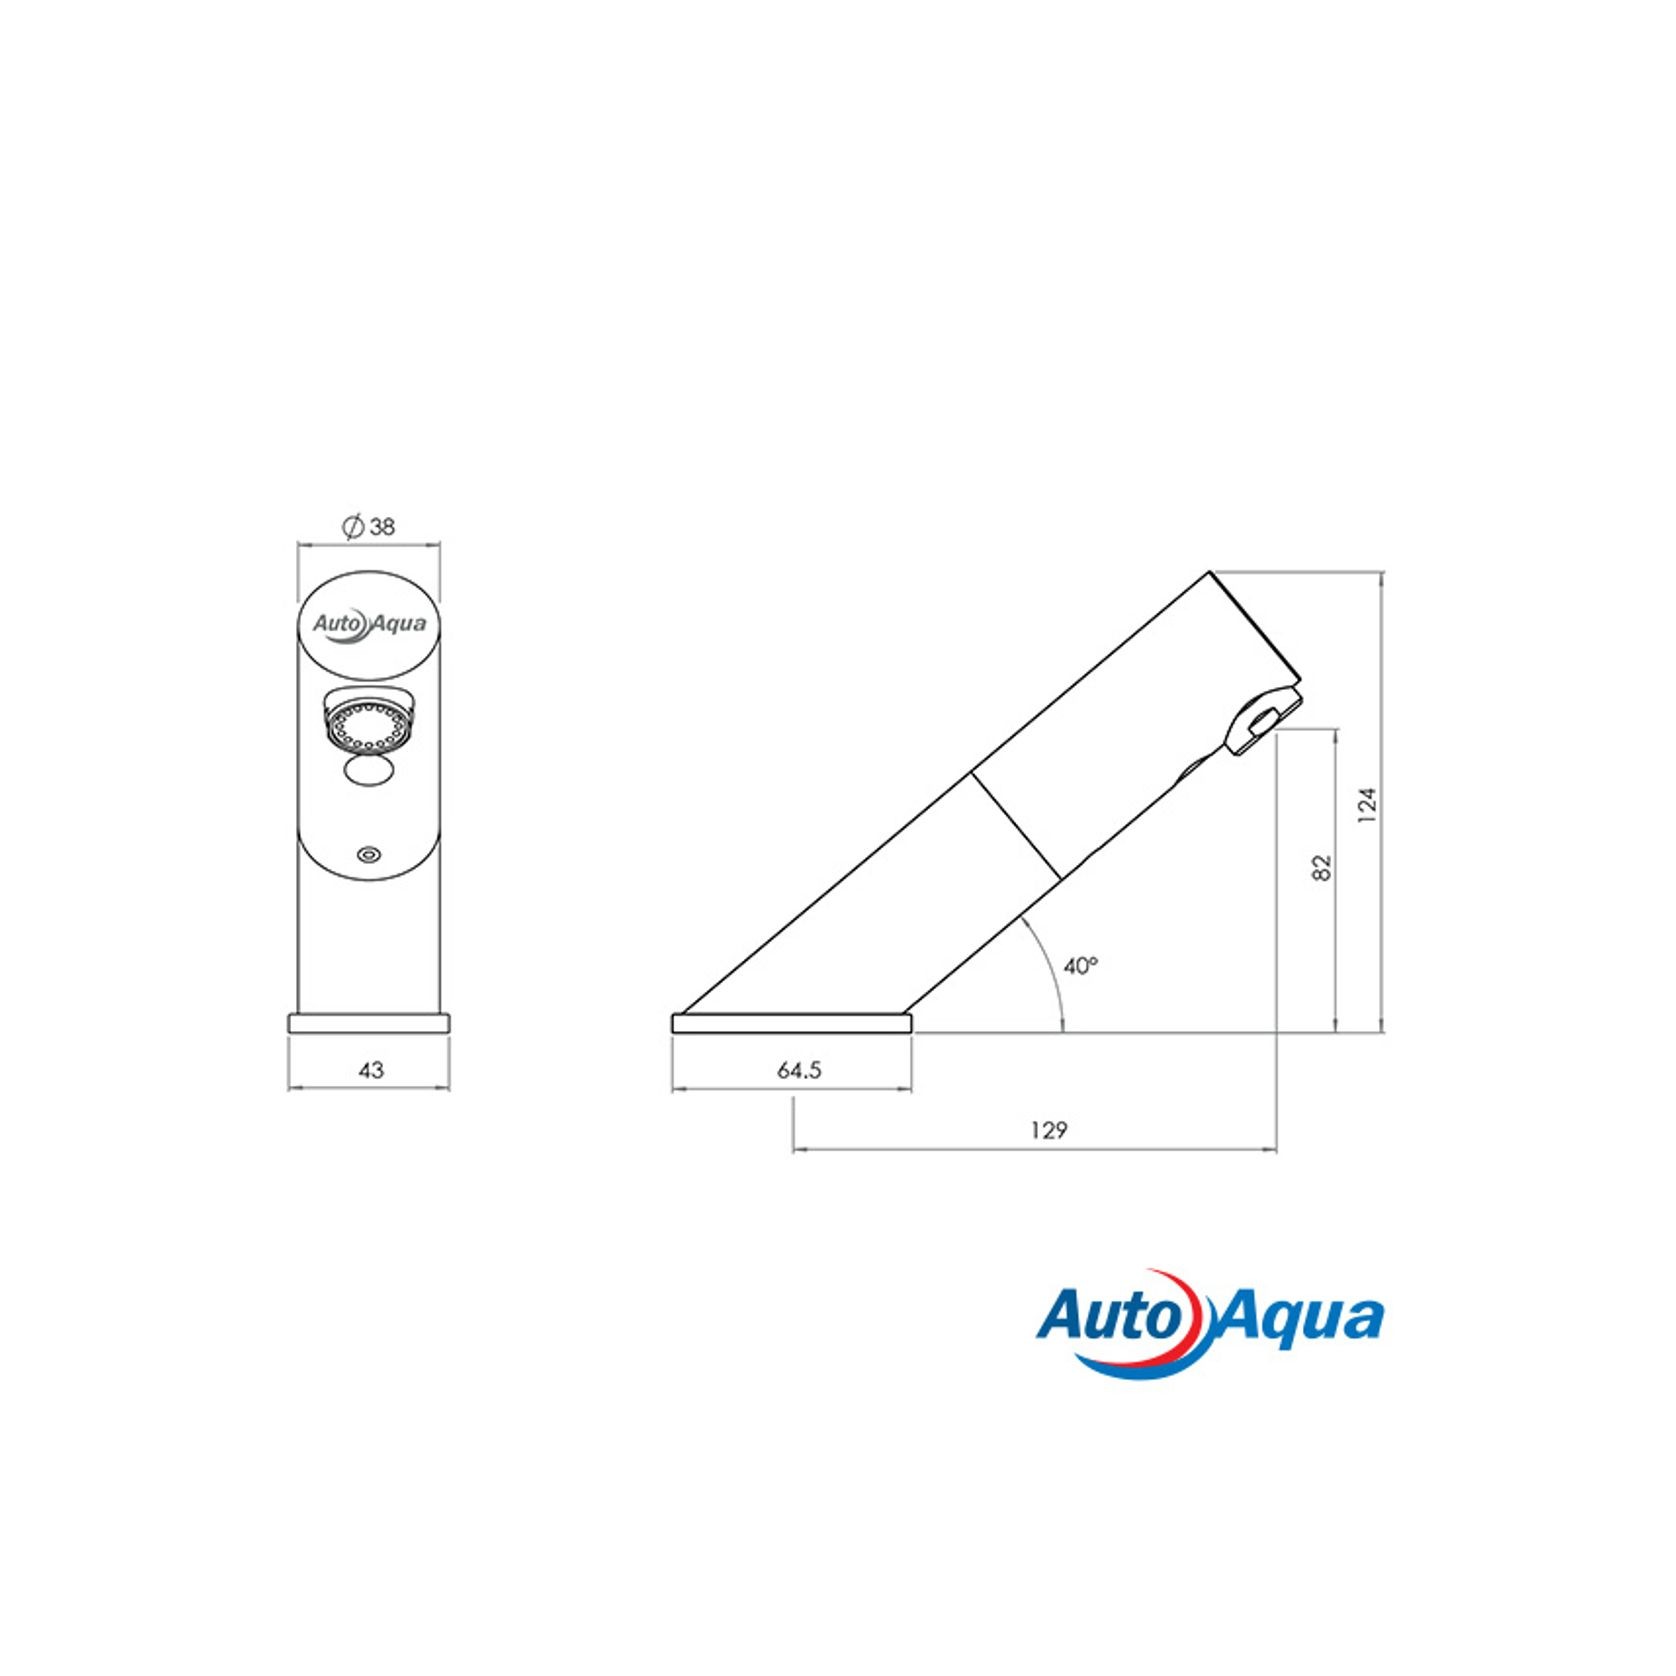 AutoAqua – S38 Hob Angle Sensor Tap gallery detail image